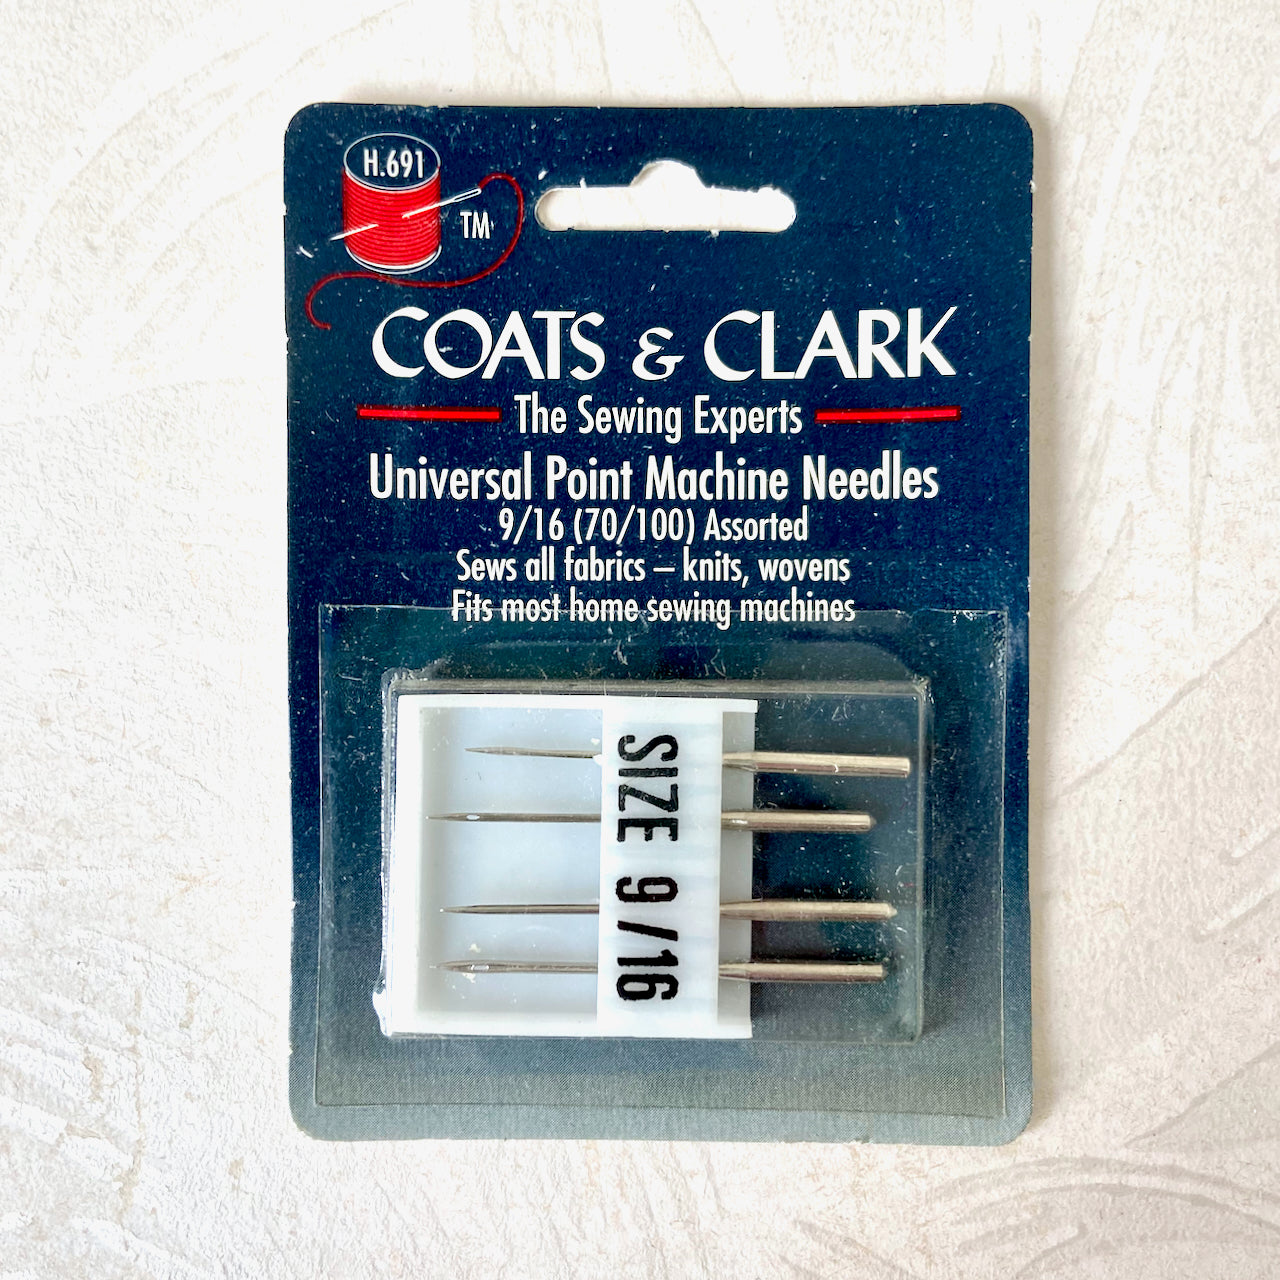    Coats_Clark_Machine_Needles